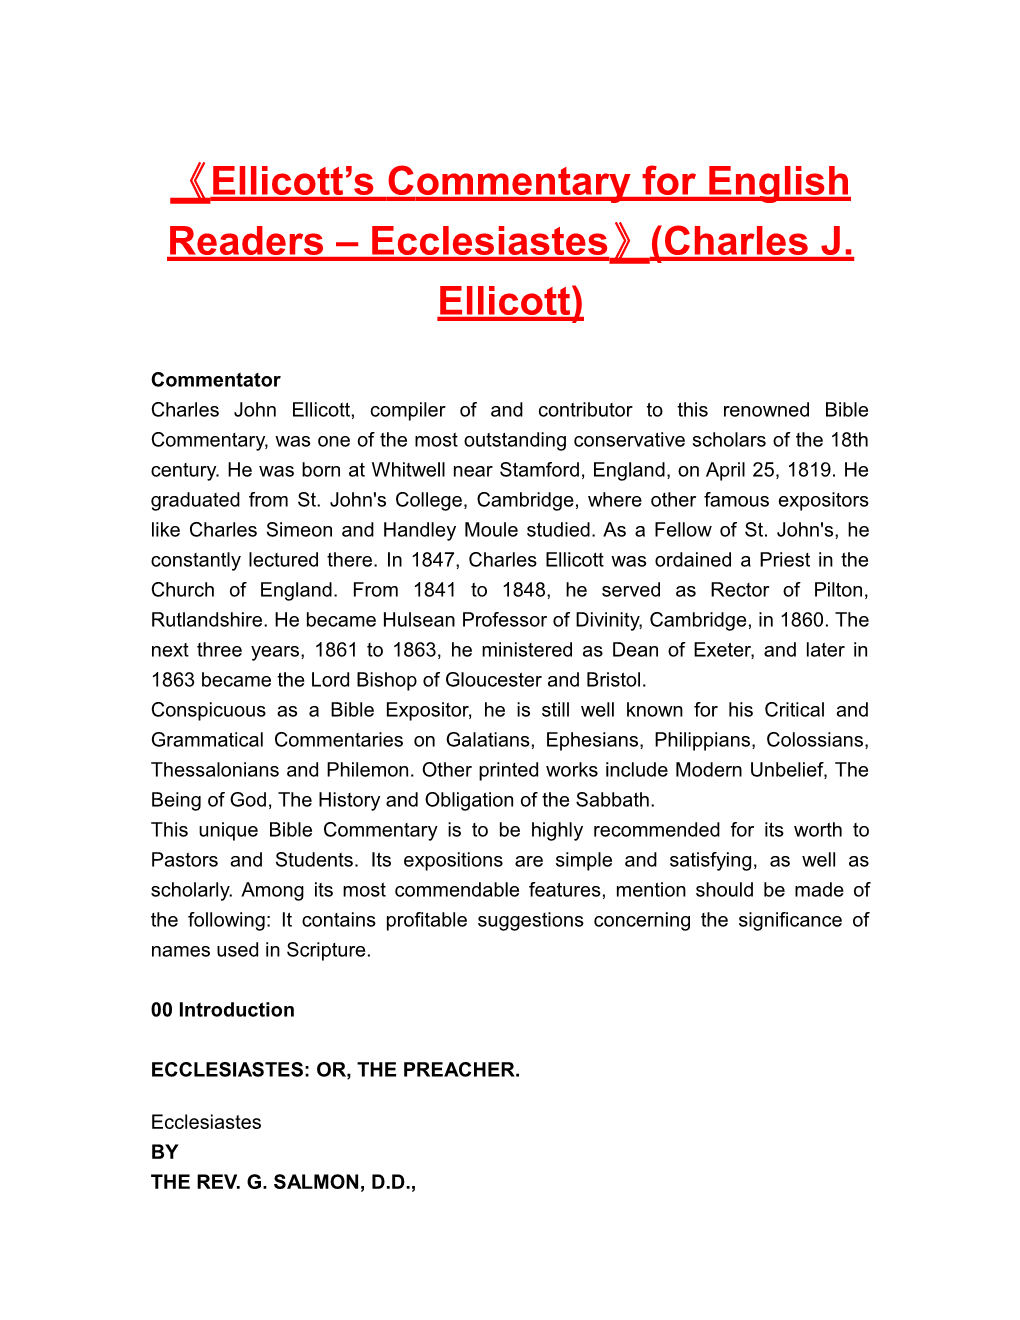 Ellicott Scommentary for English Readers Ecclesiastes (Charles J. Ellicott)